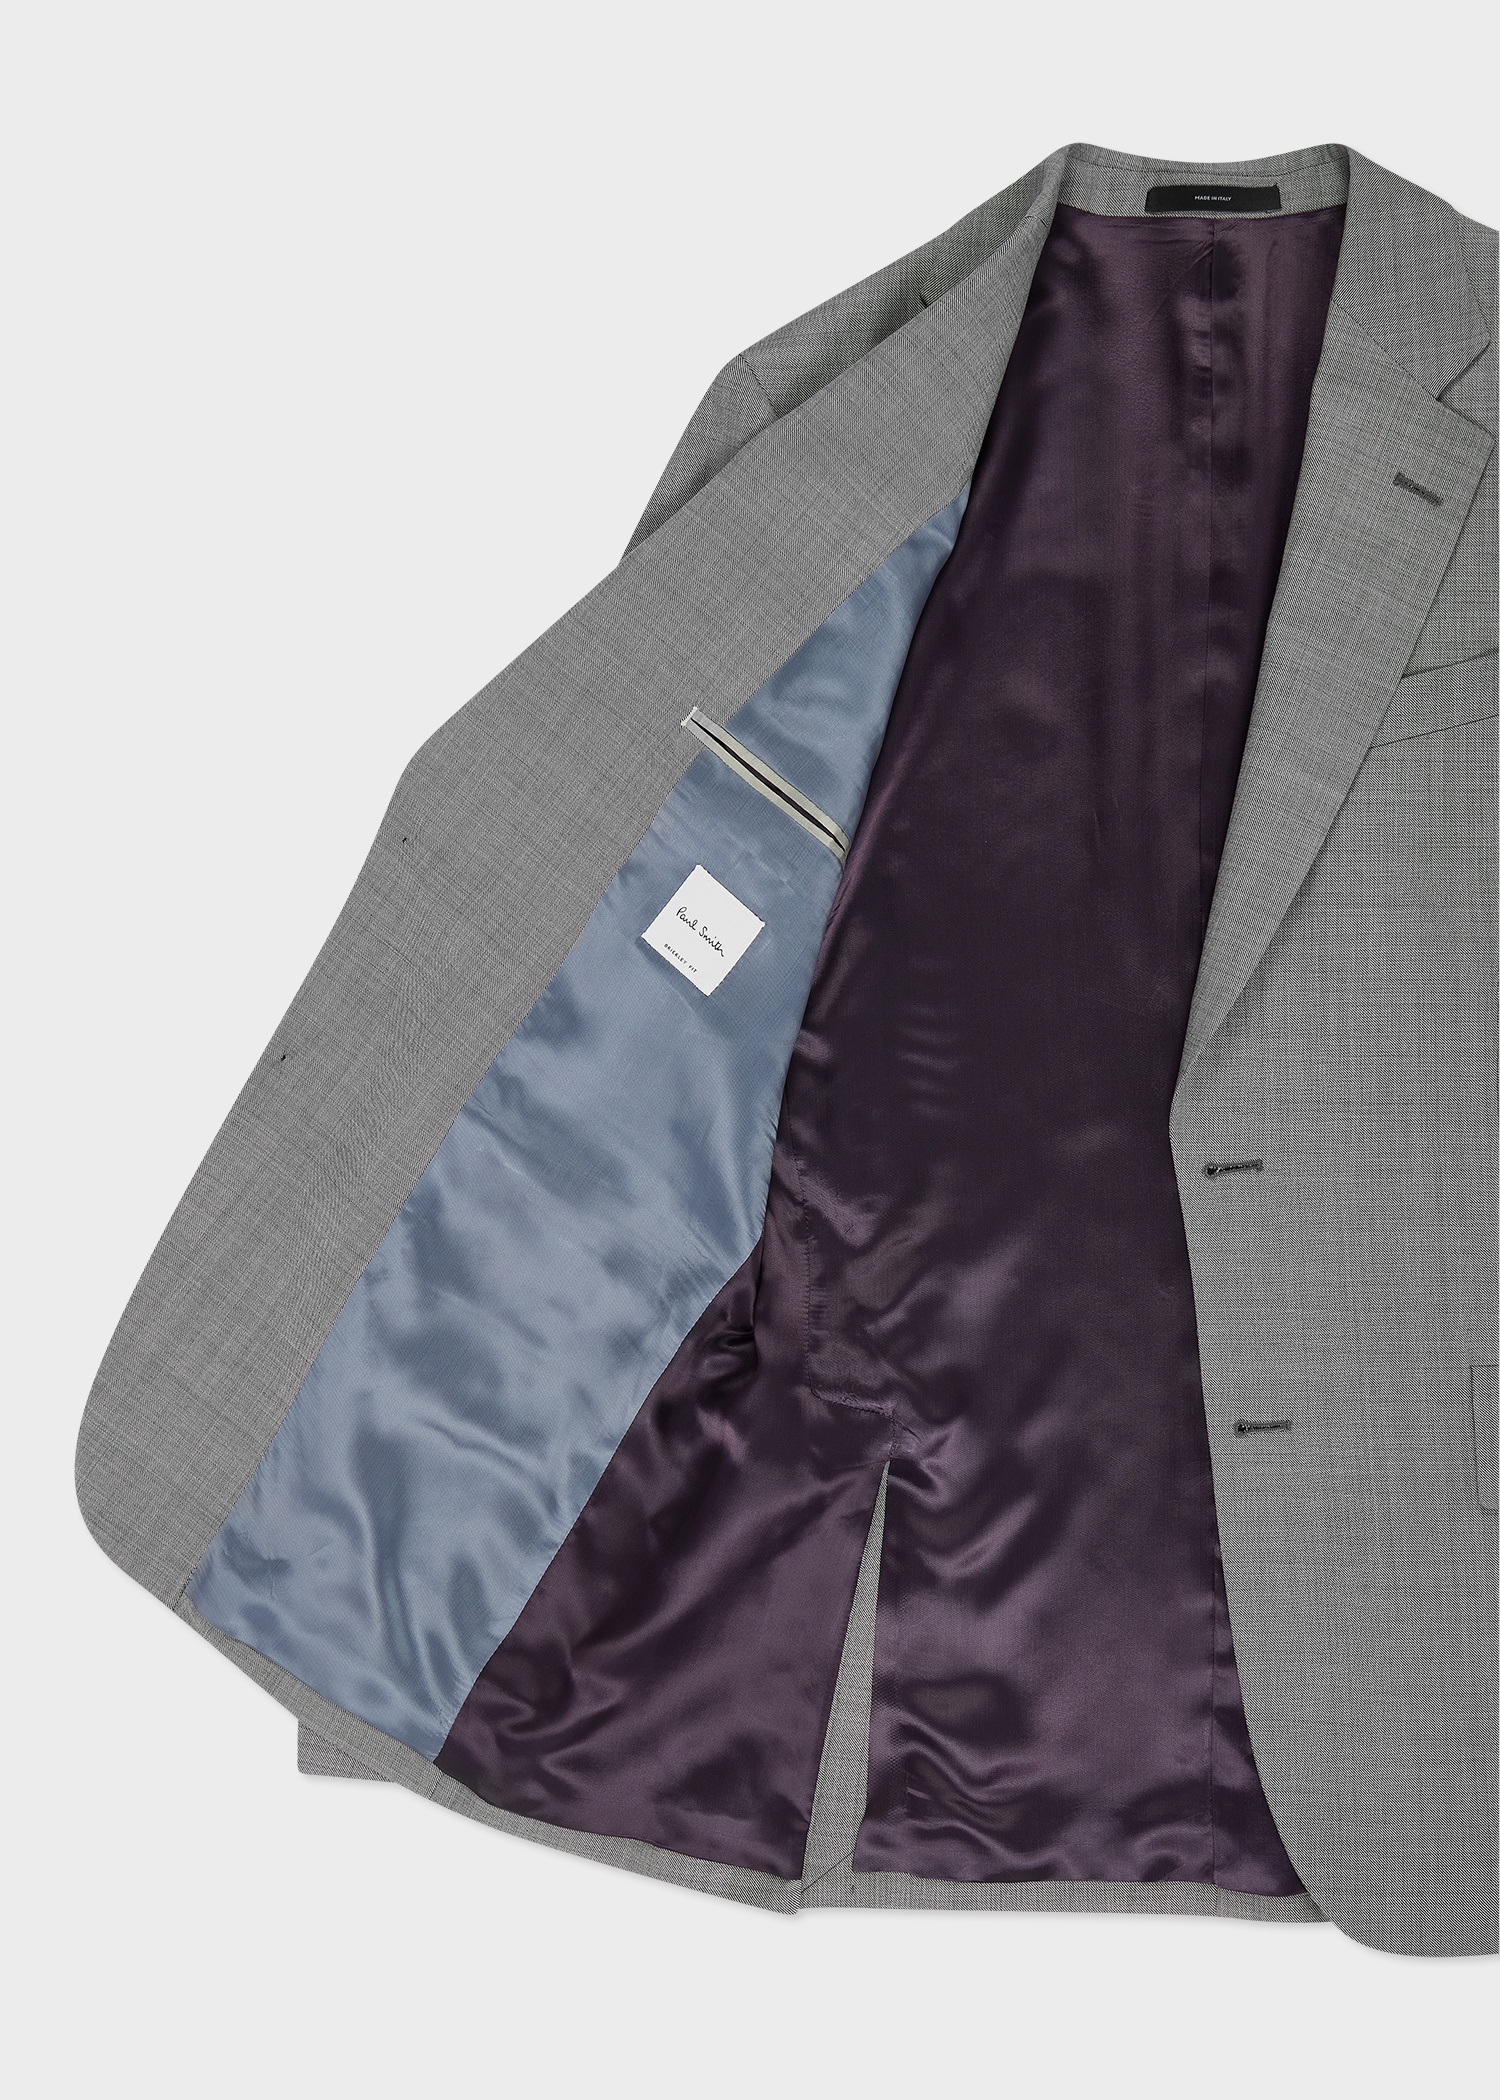 The Brierley - Light Grey Sharkskin Wool Suit - 3